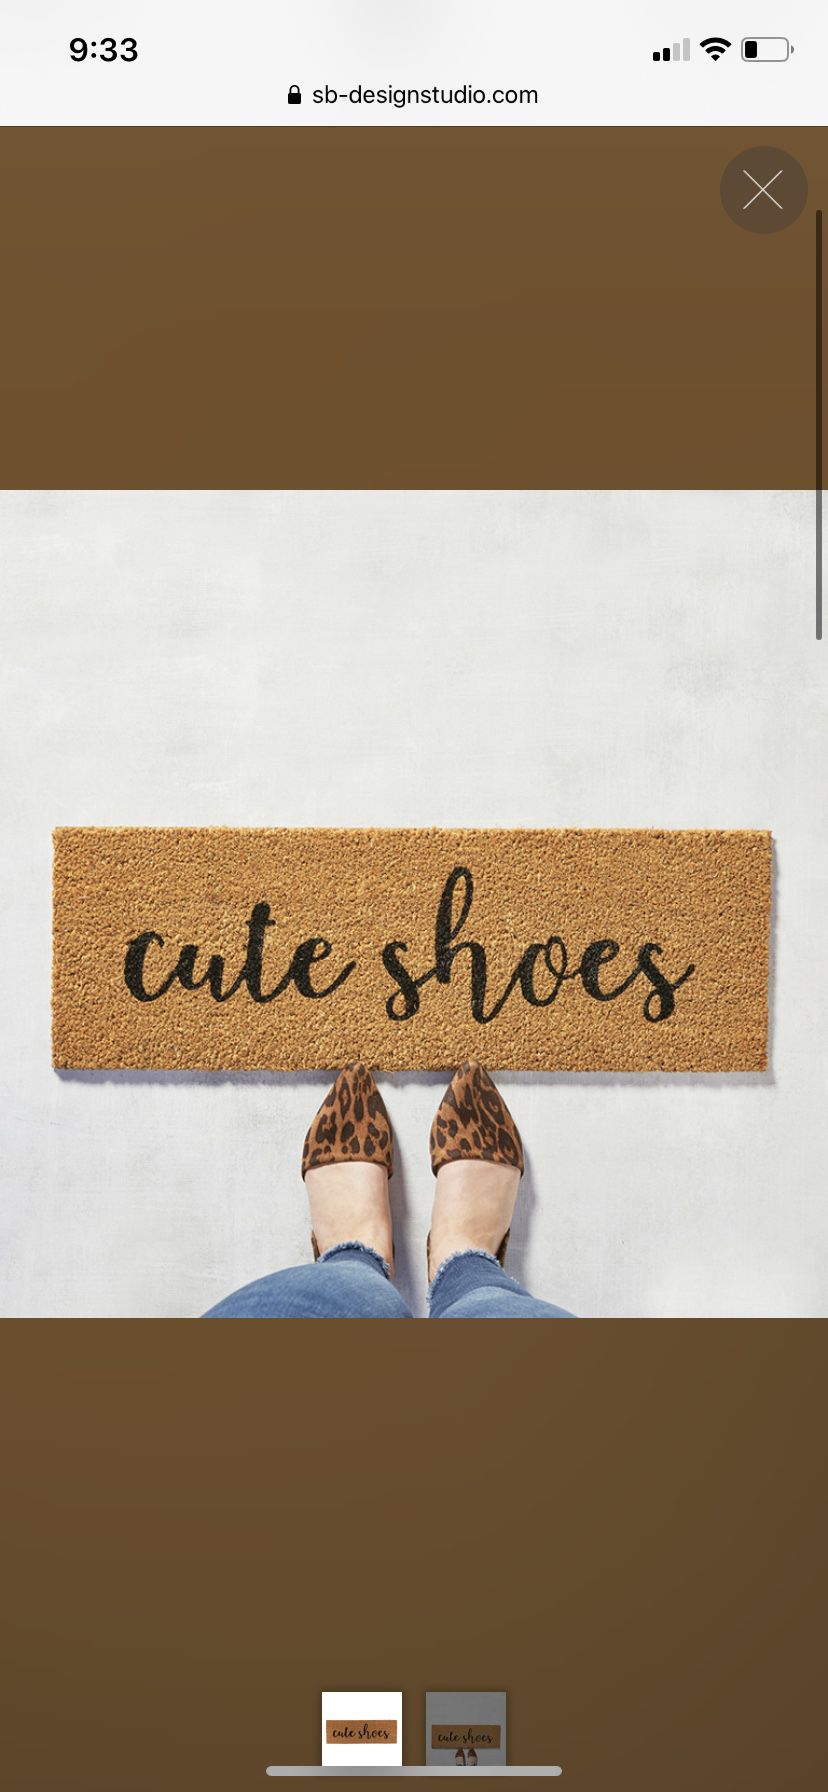 Cute shoes doormat